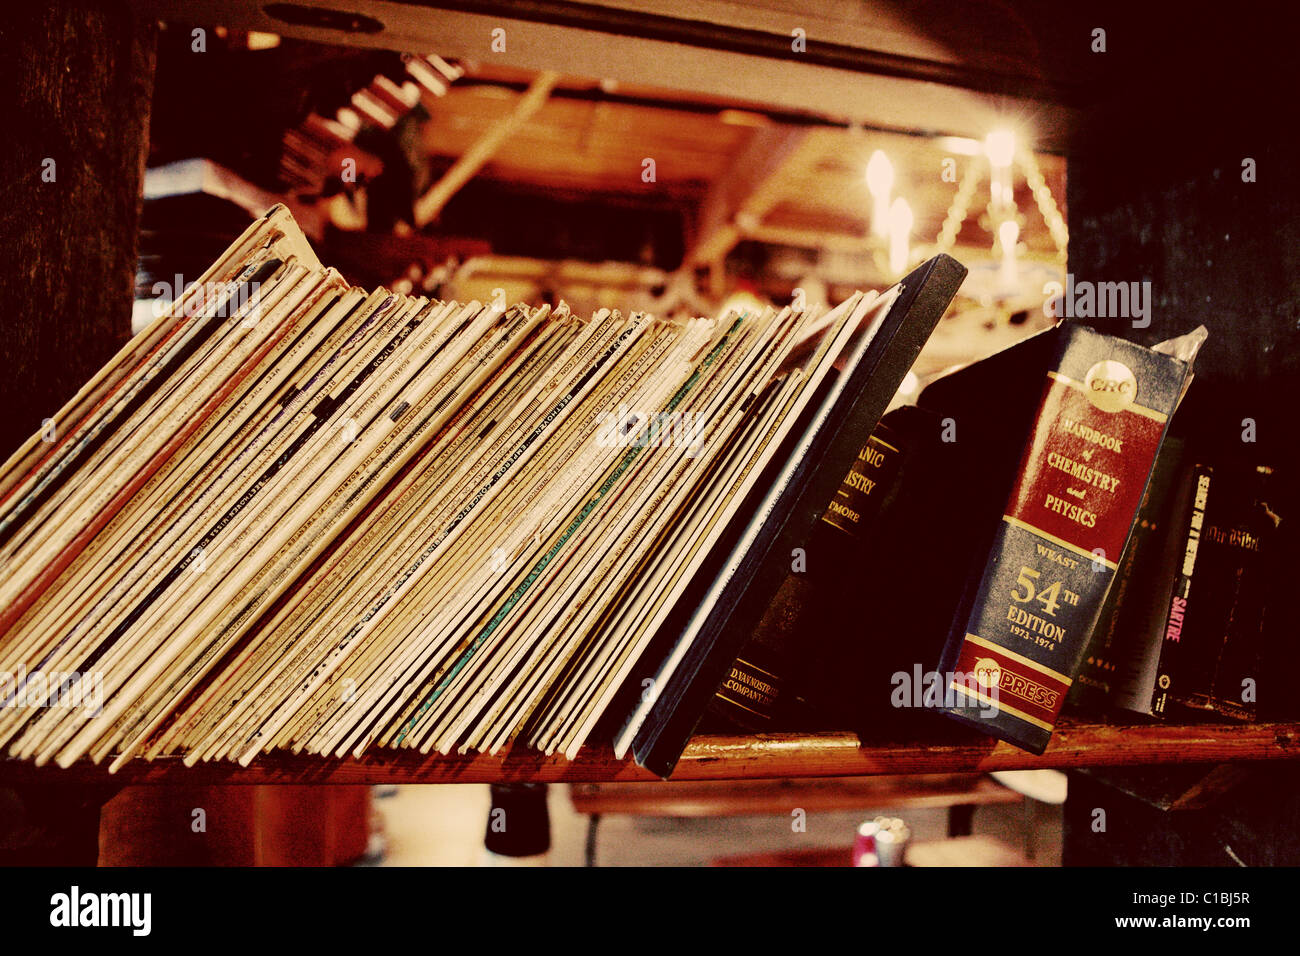 STACK OF OLD VINYL RECORDS MUSIC RECORD VINYL VINTAGE SHELF Stock Photo